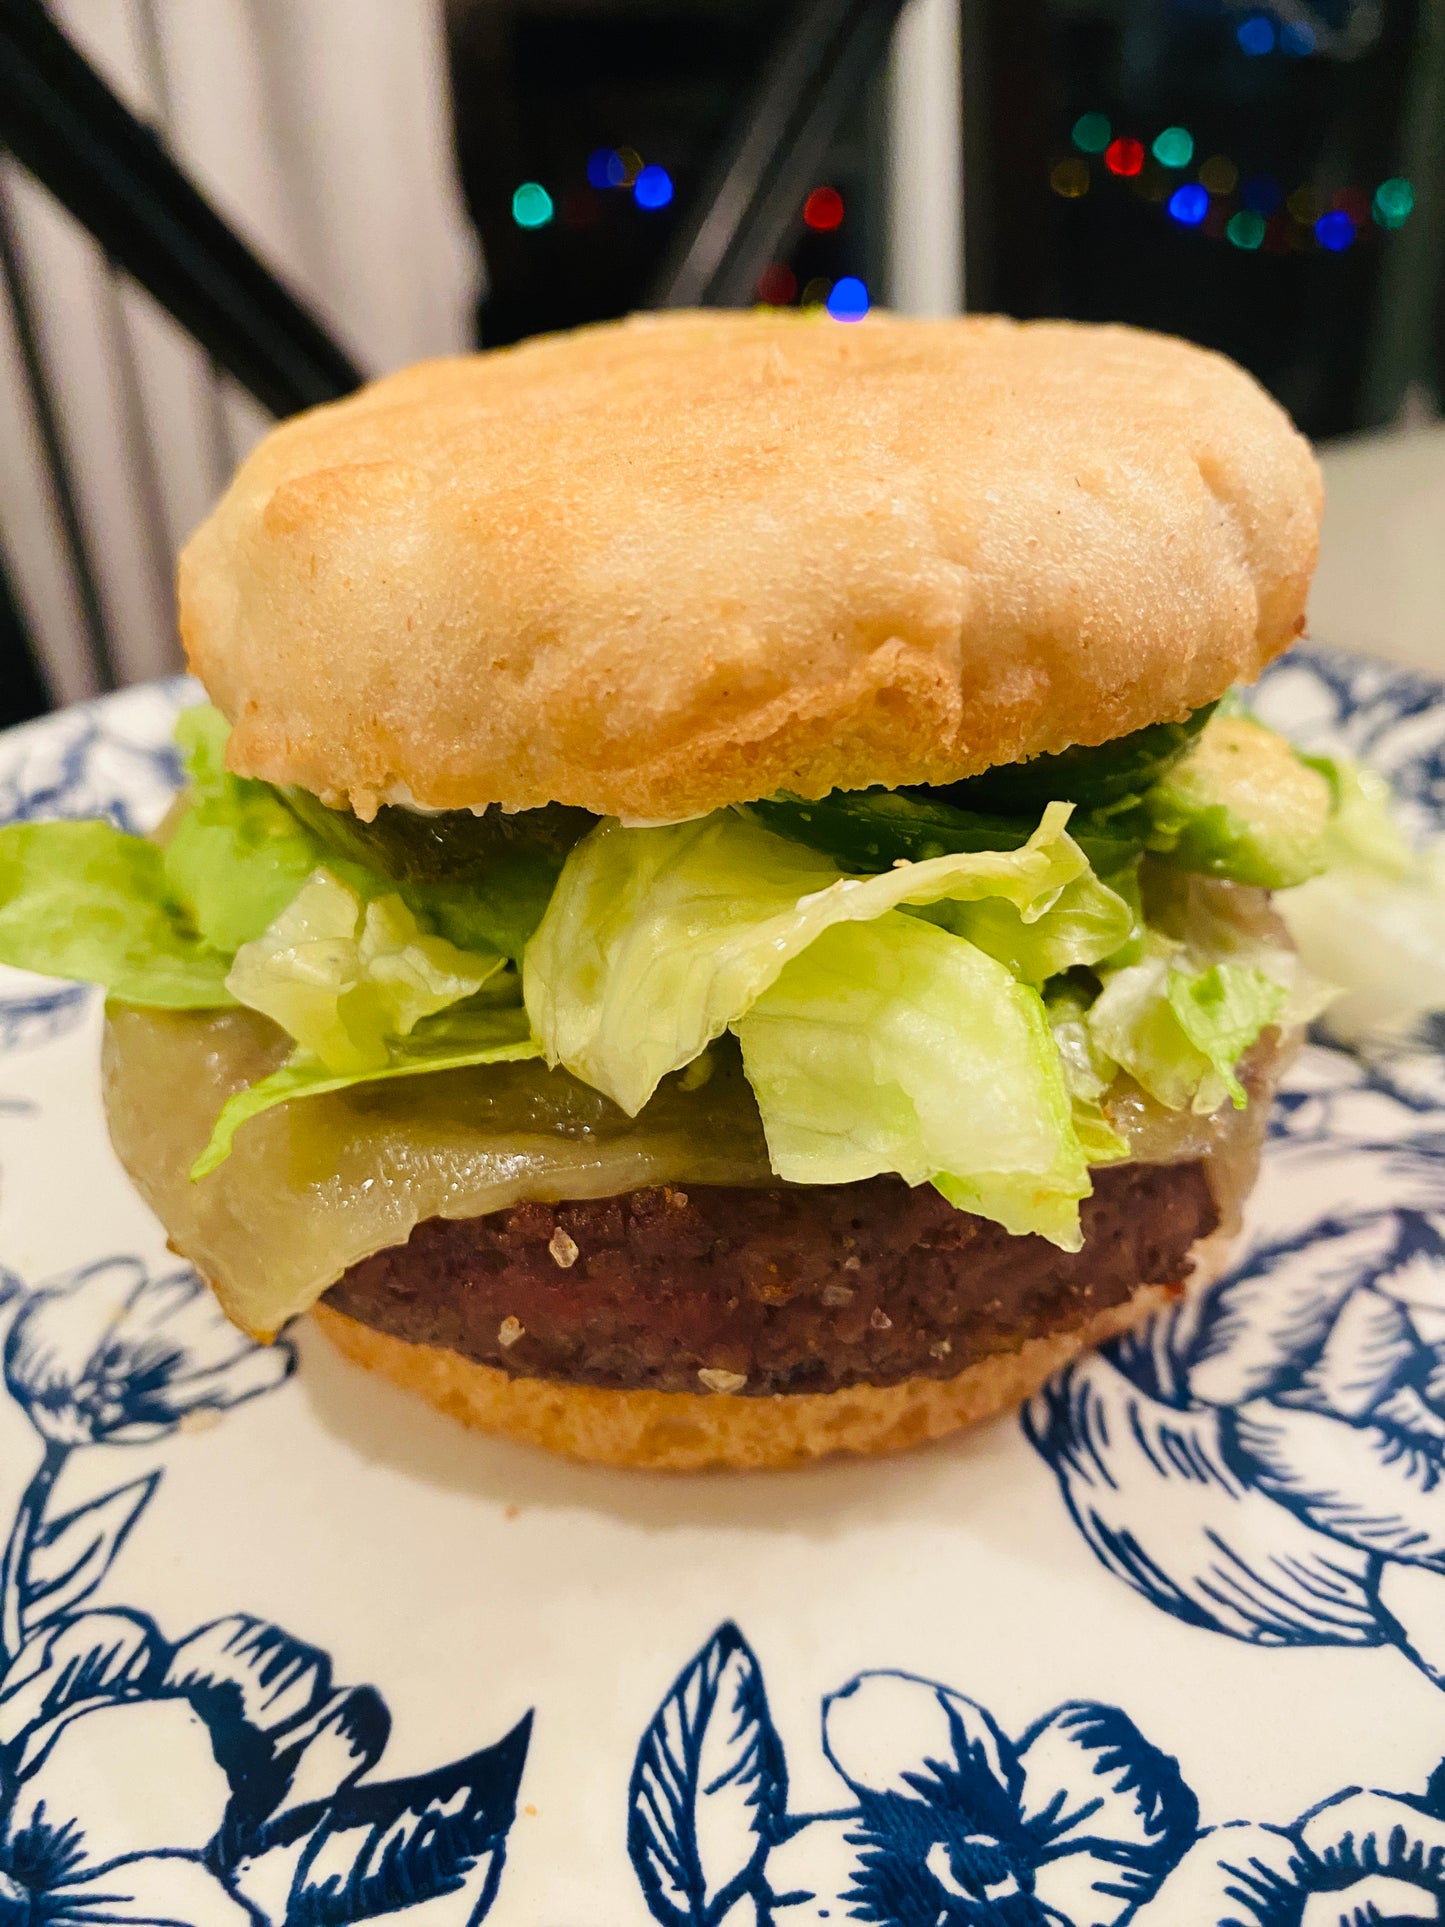 Bun Pan - Perfect for Burger Buns, Sandwiches, Treats and More!